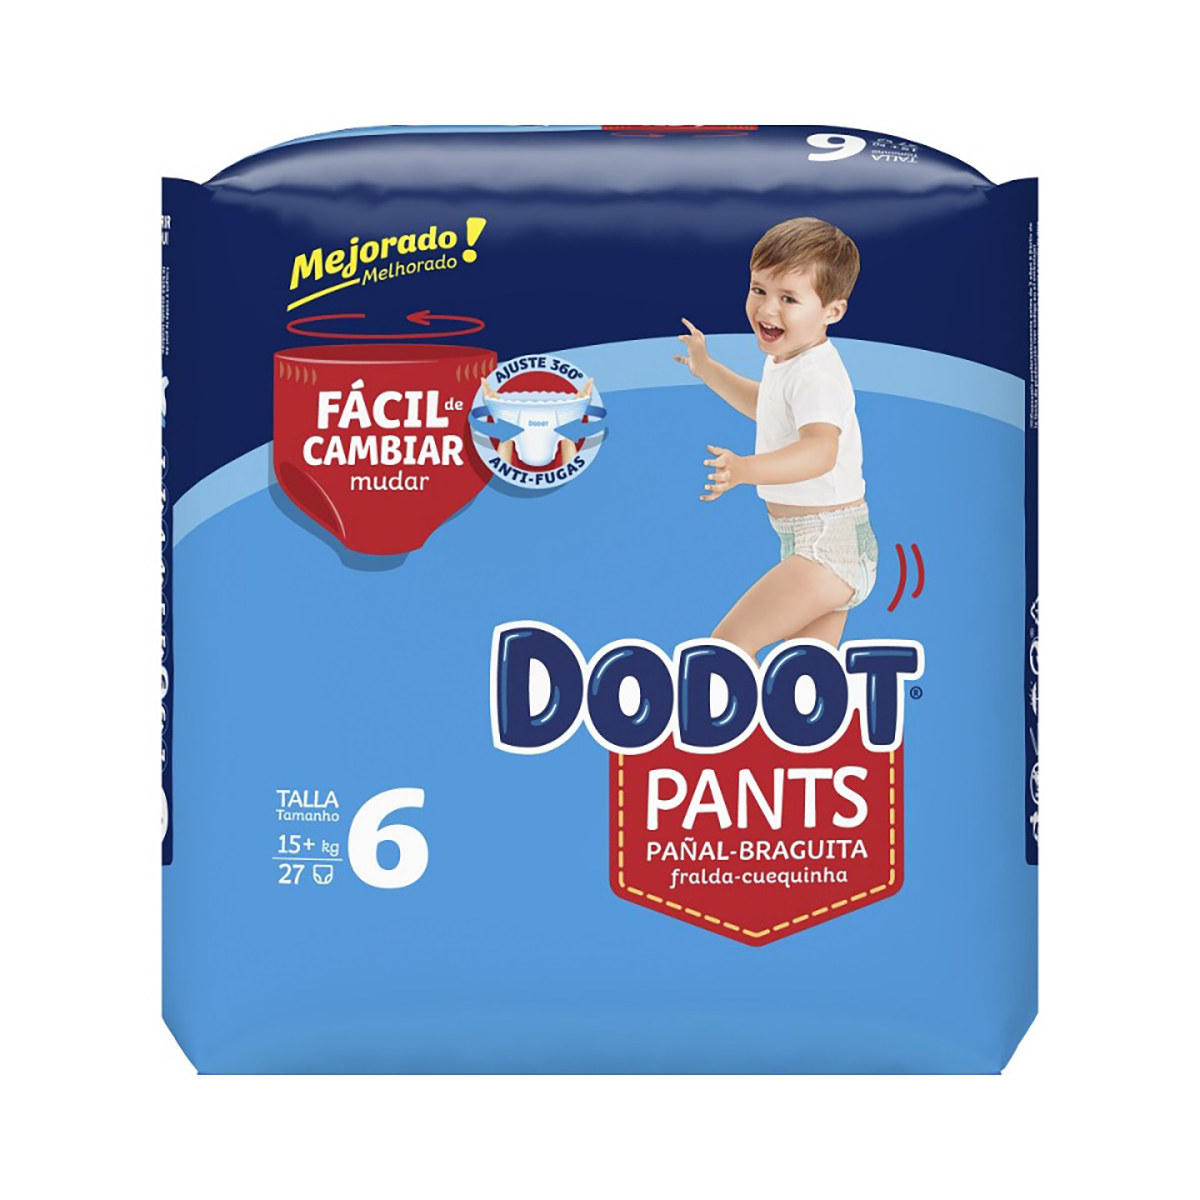 Comprar Pañal t6 6-6 +15kg dodot pants en Supermercados MAS Online